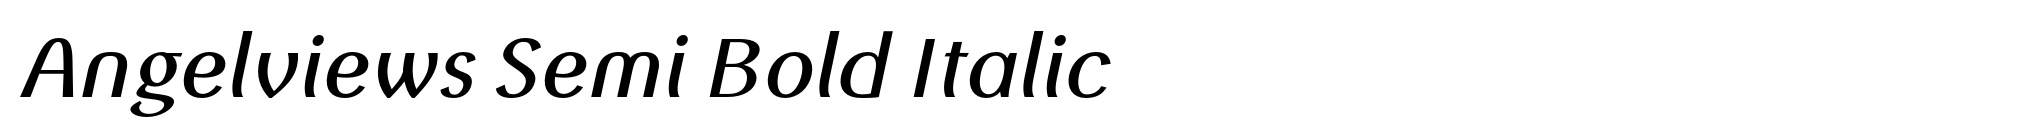 Angelviews Semi Bold Italic image